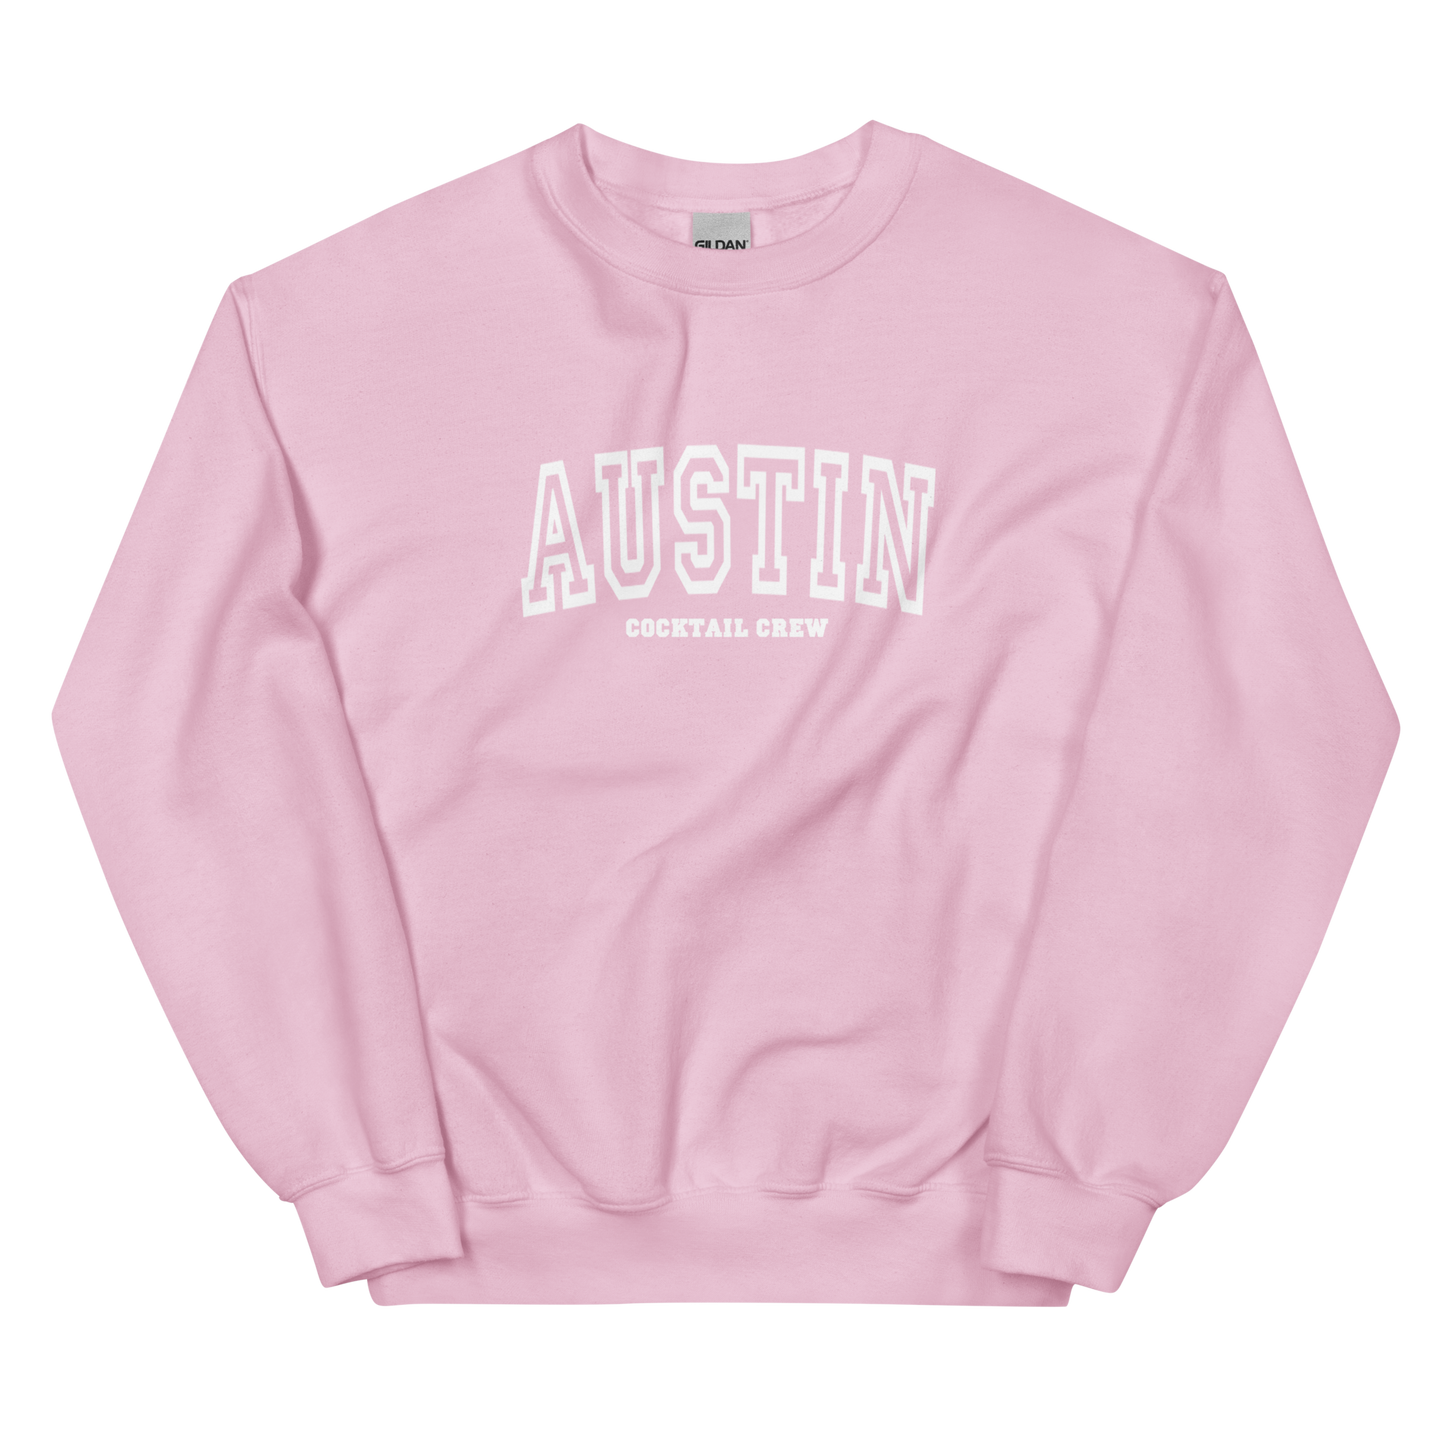 Collegiate Collection Austin Sweatshirt